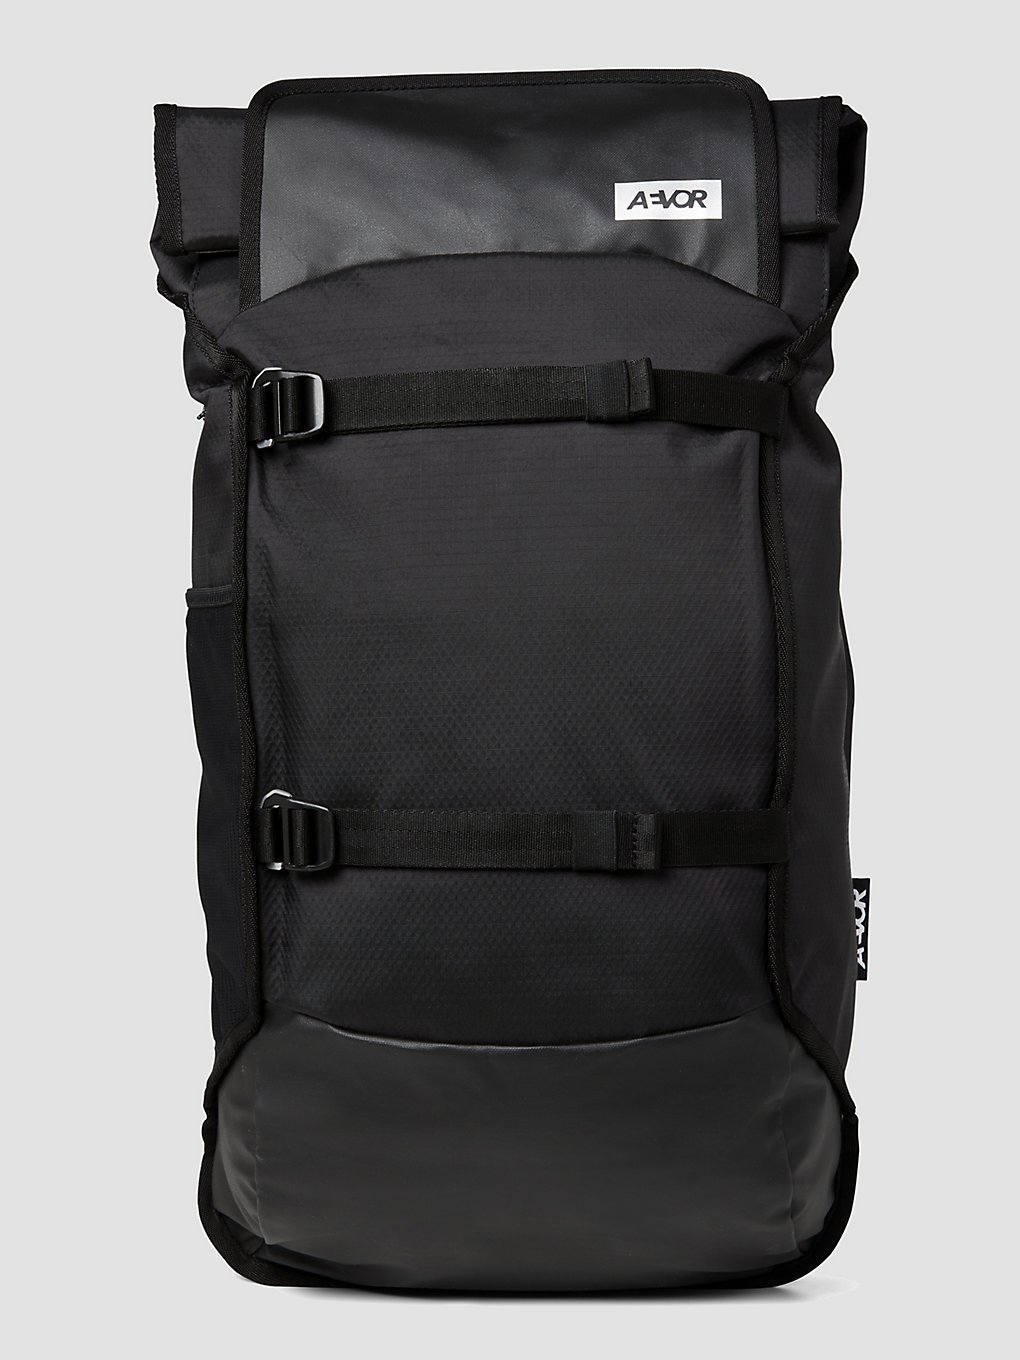 AEVOR Trip Pack Proof Rucksack proof black kaufen